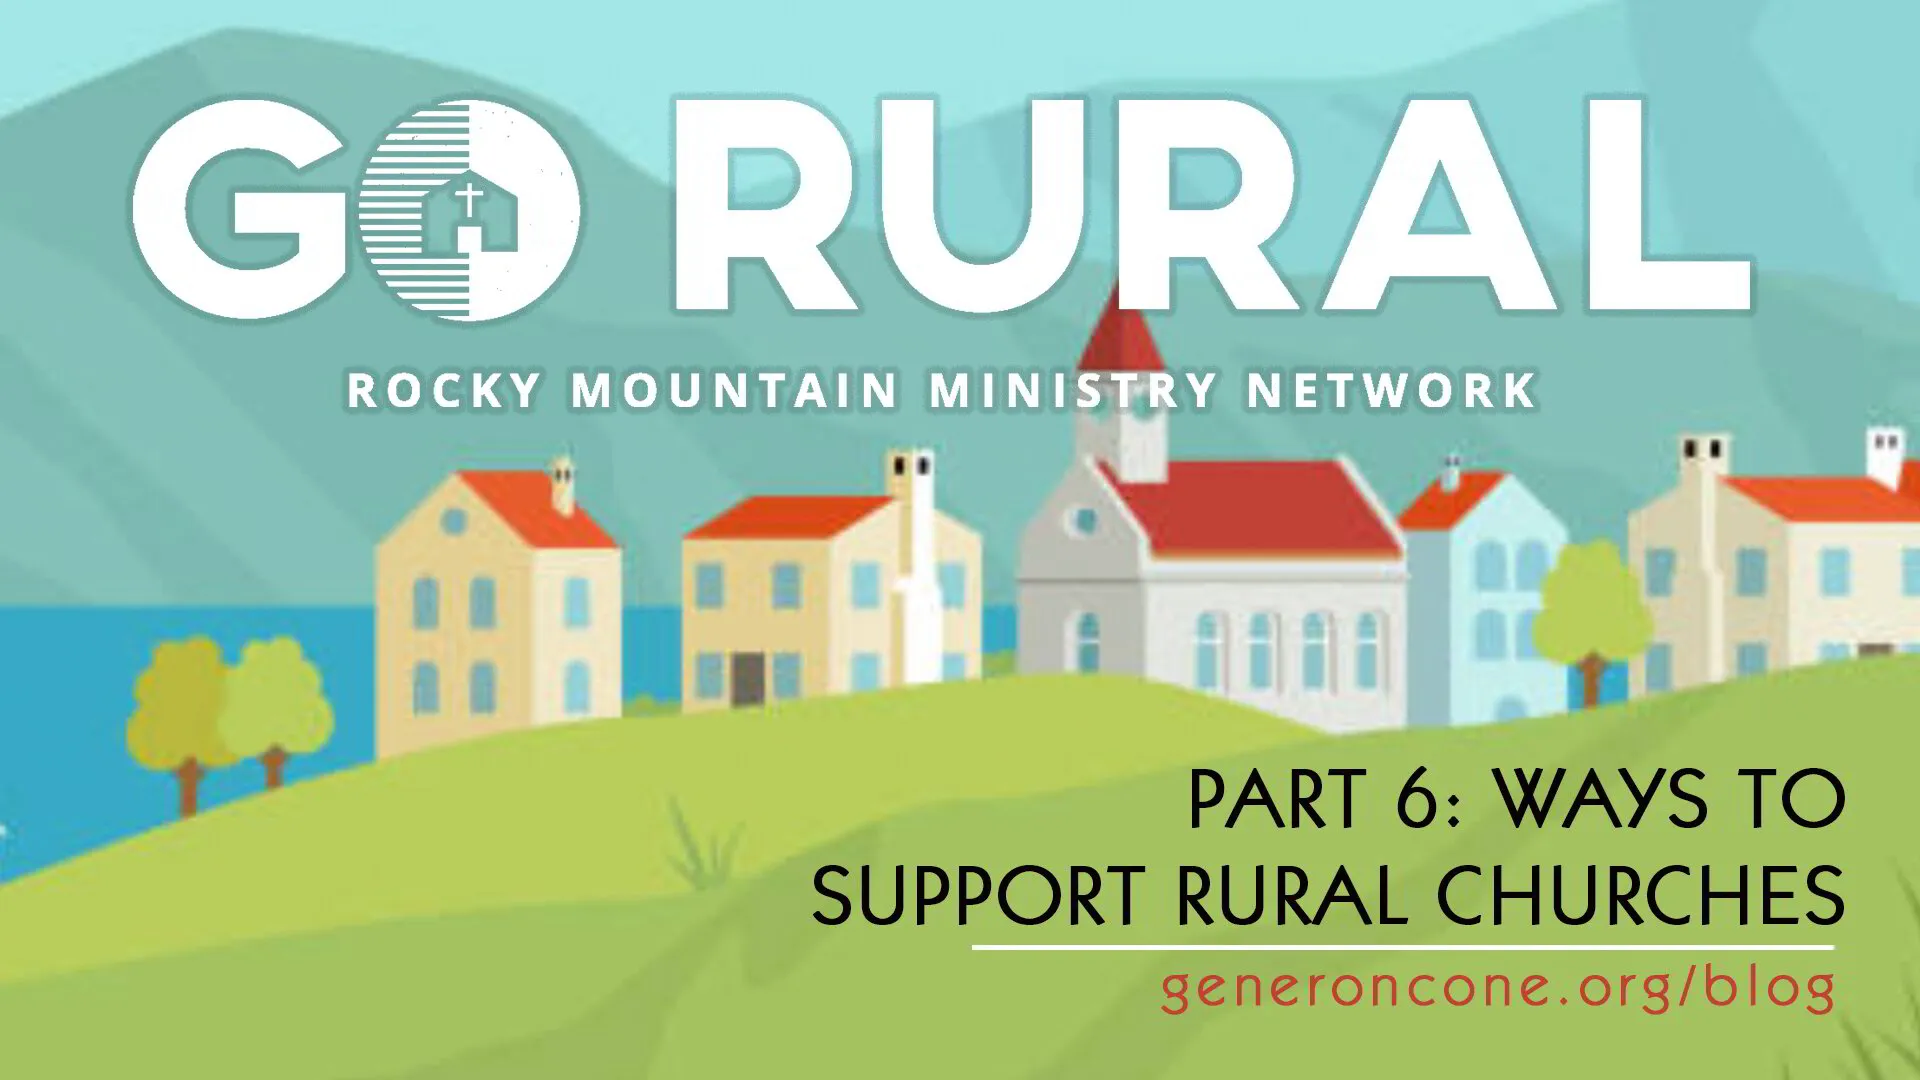 Go Rural, Part 6: Ways to Support Rural Churches